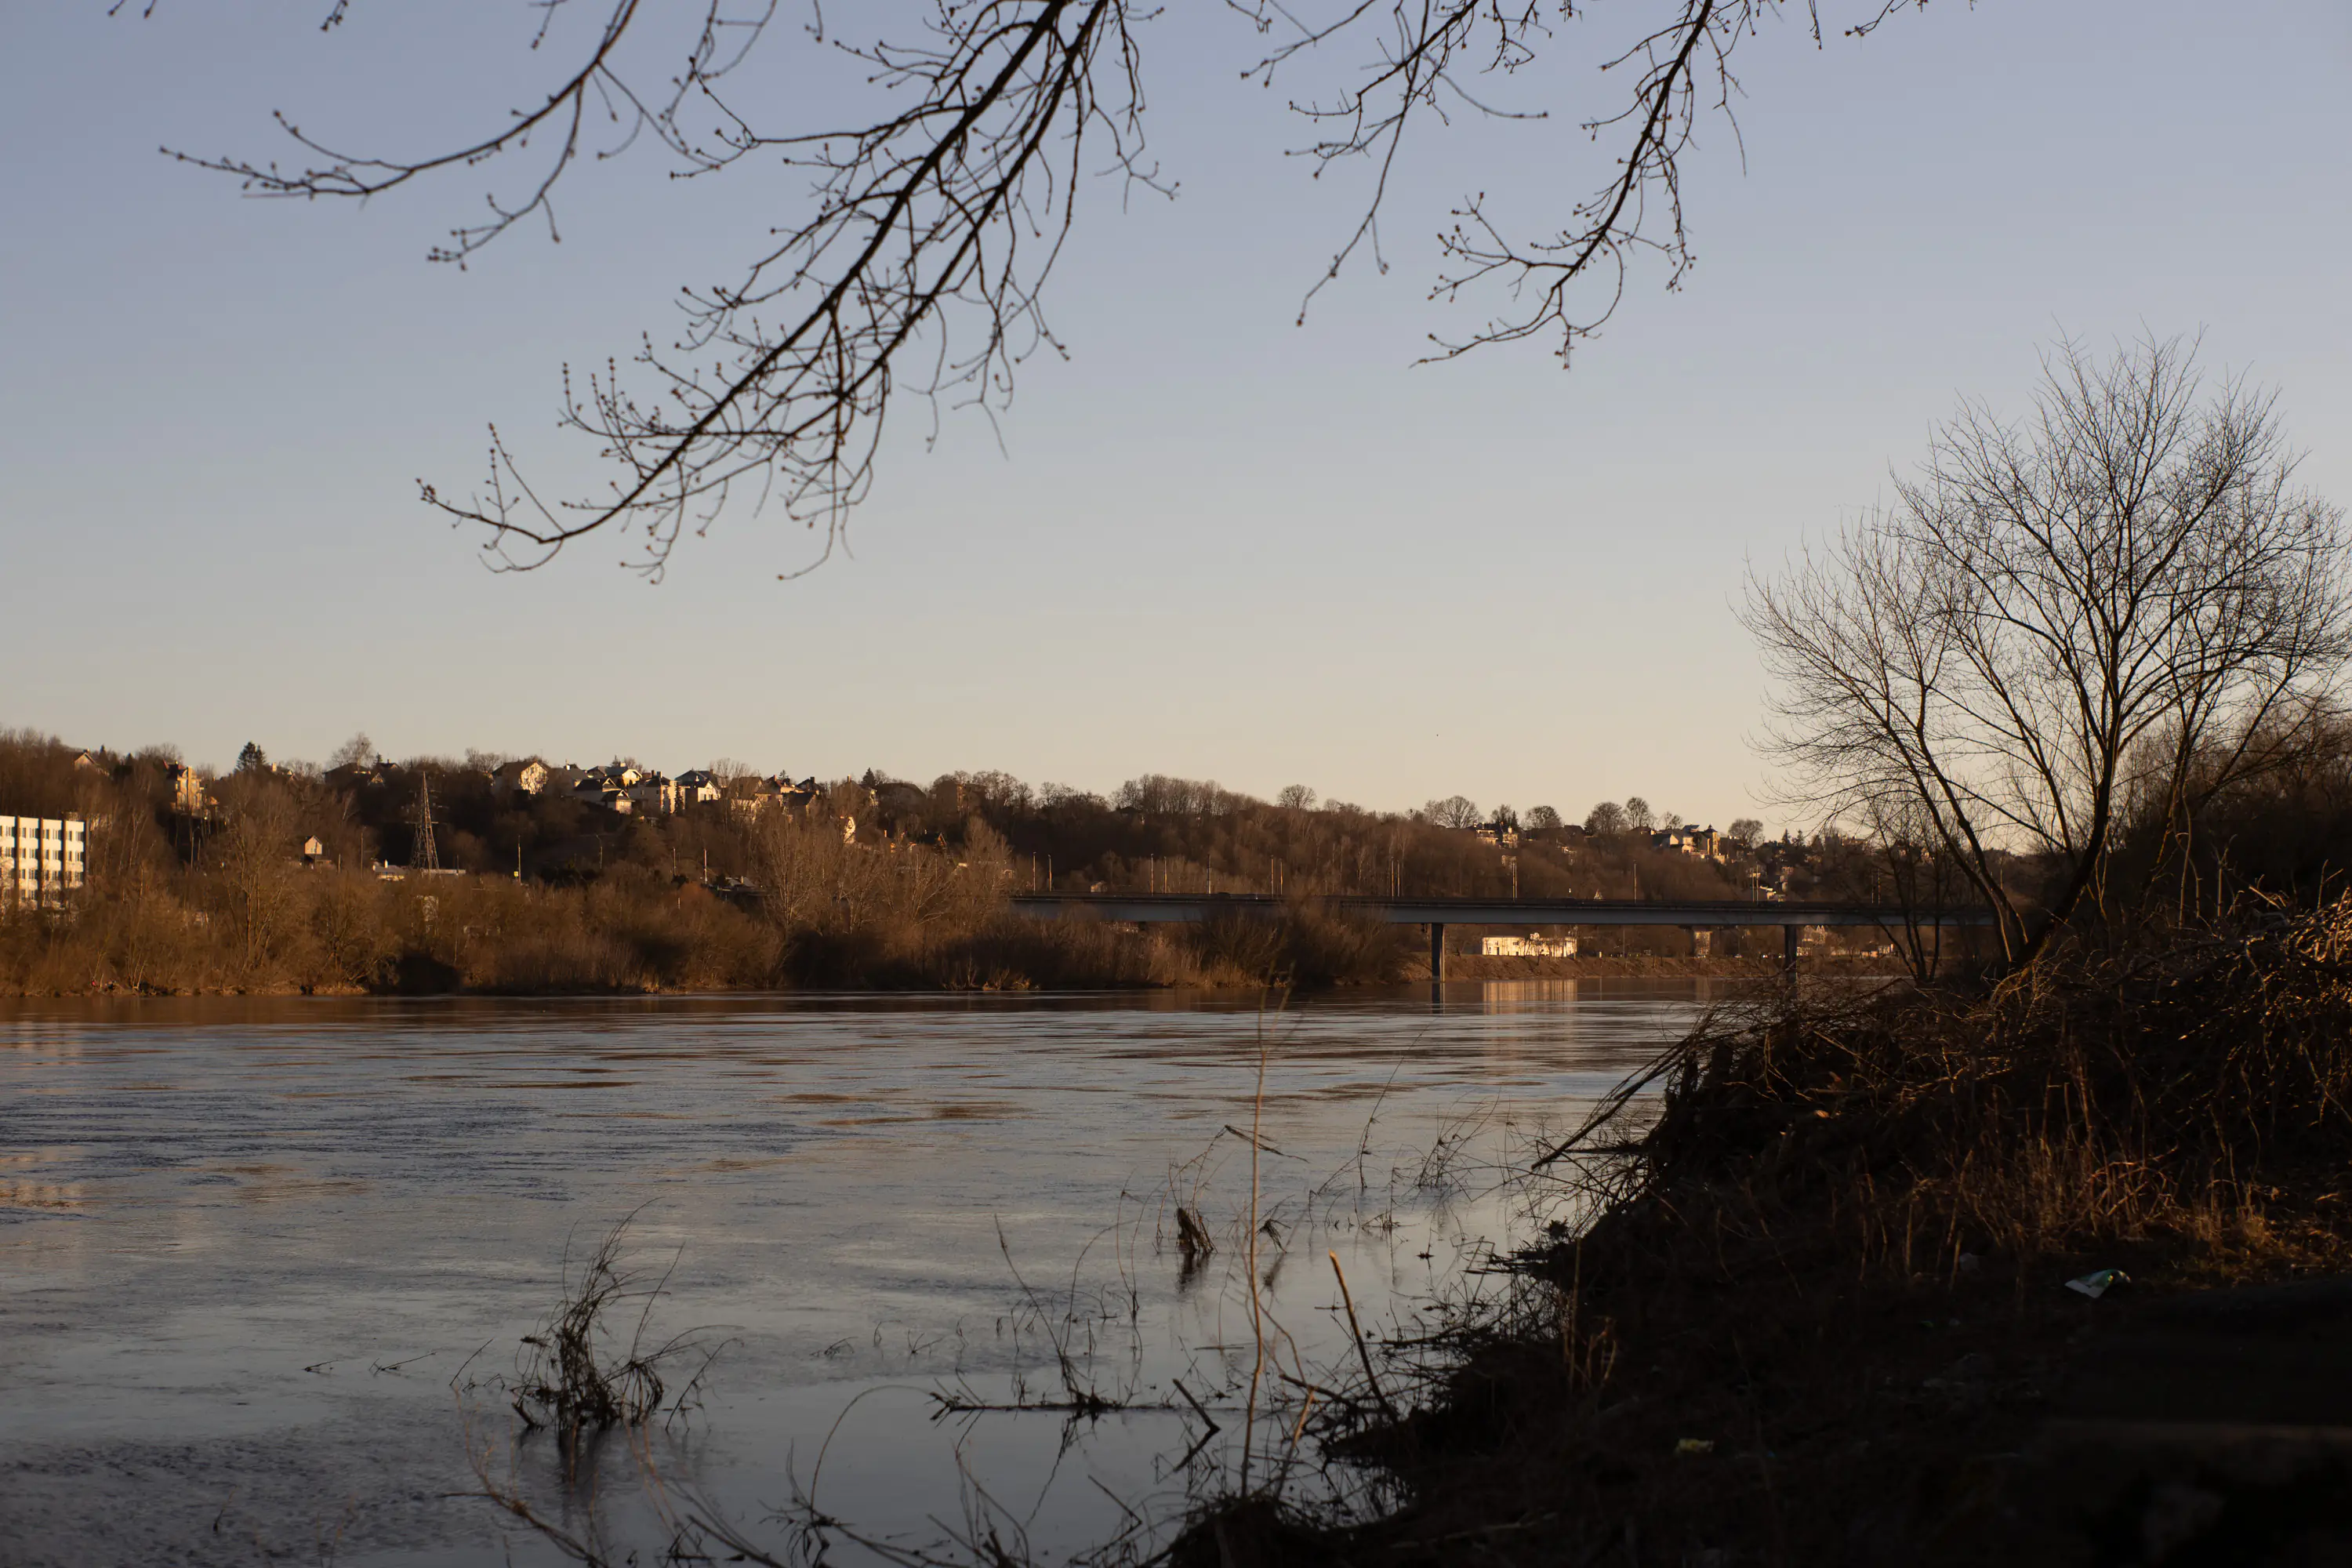 View of Kaunas City, next to the river Neris riverside - shot at f4